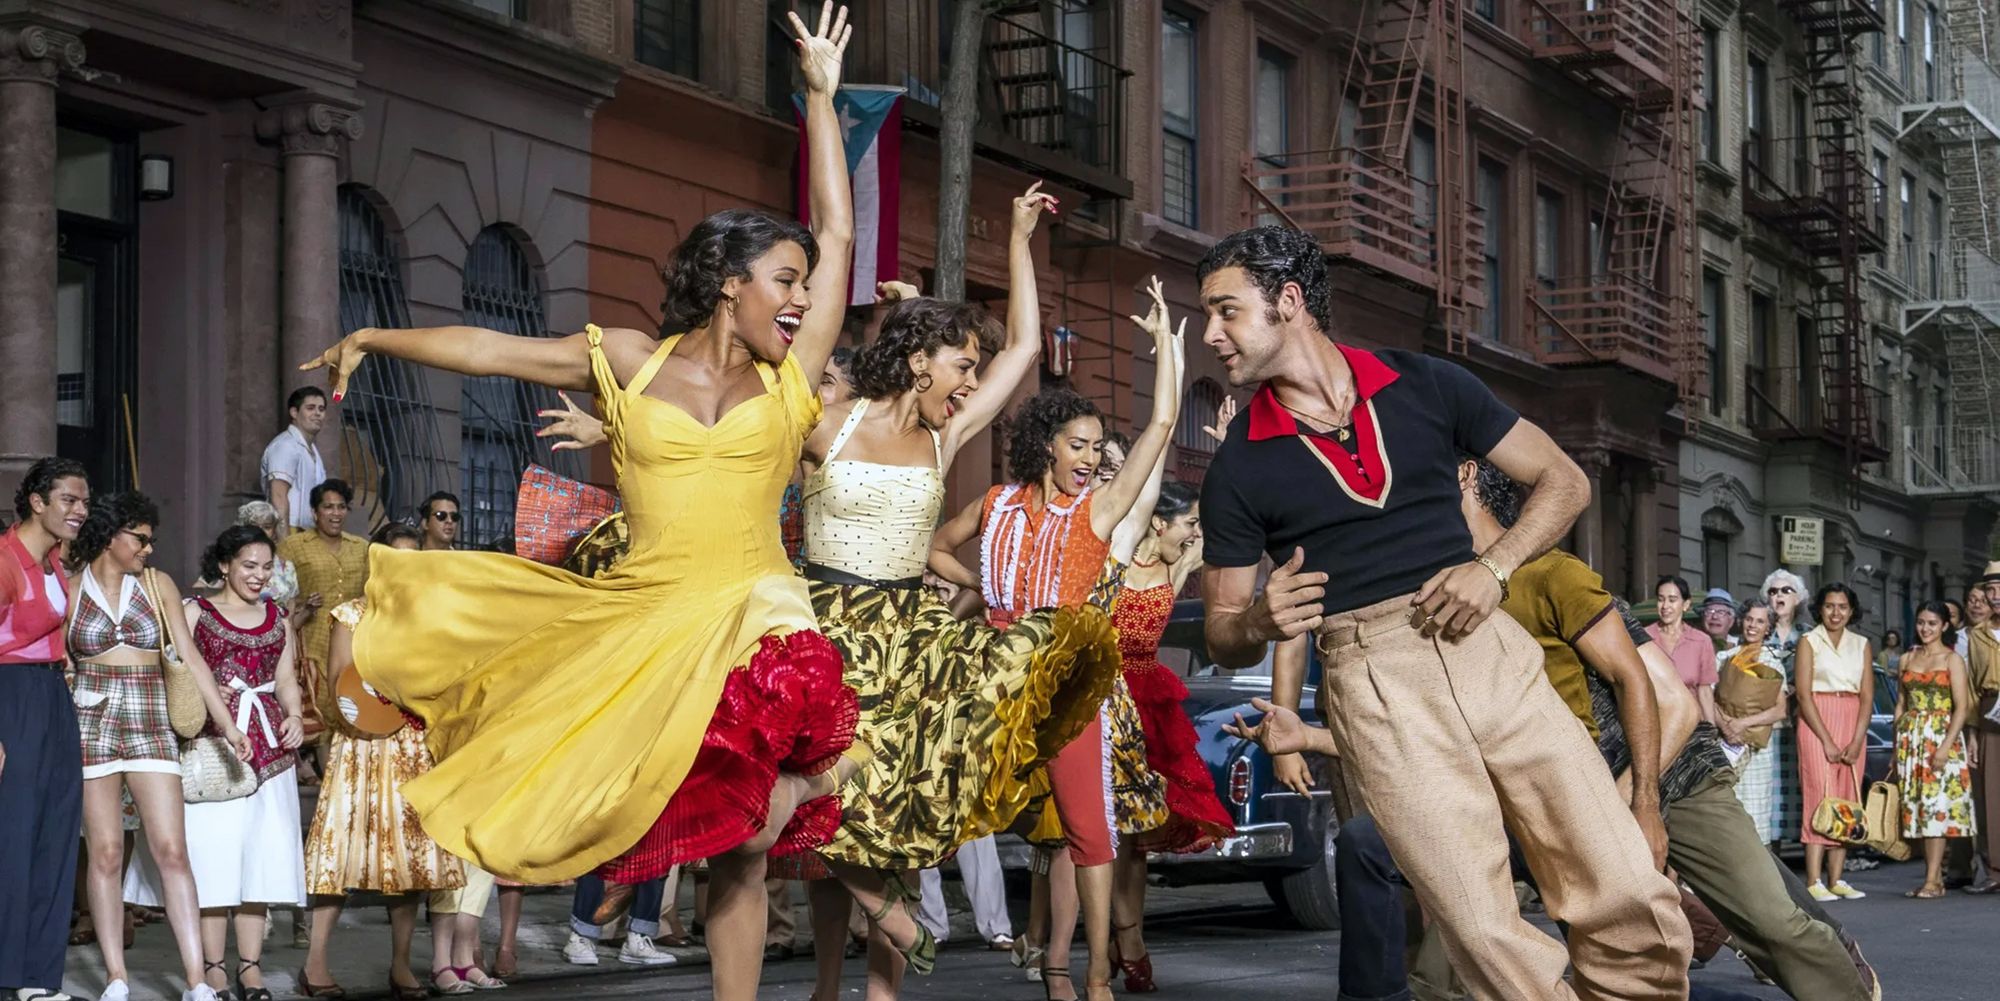 People dancing in the street in West Side Story